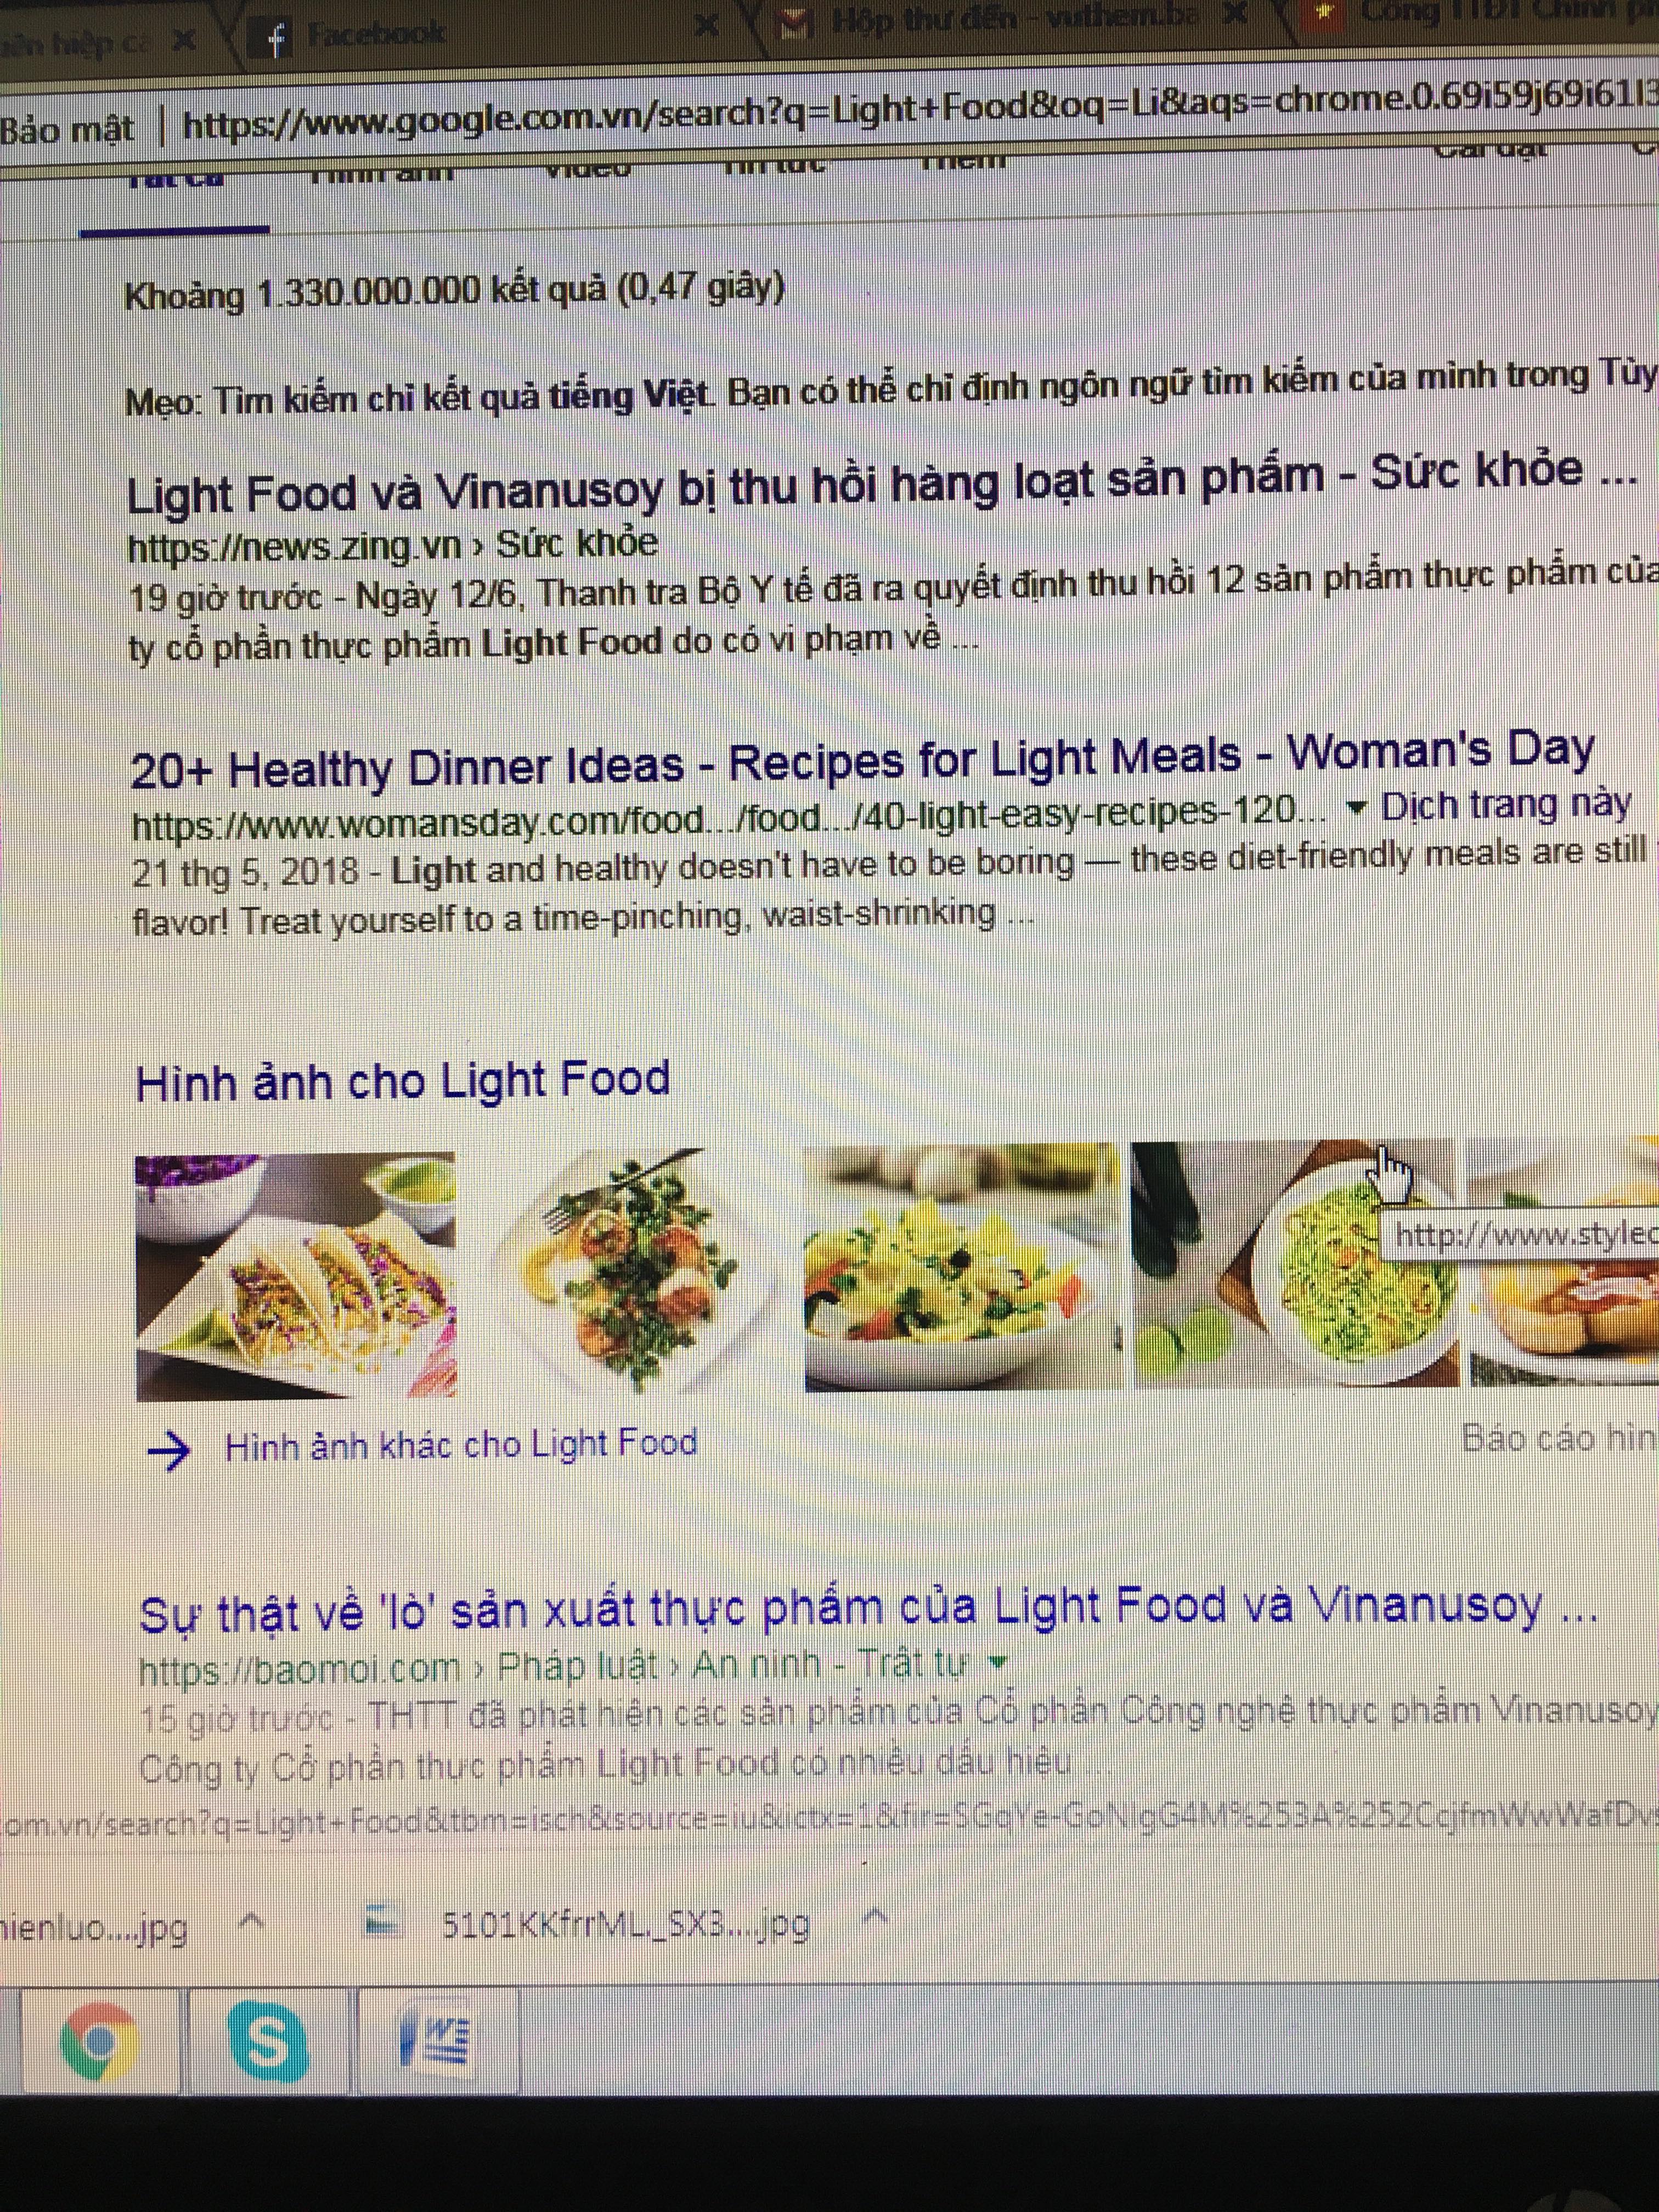 light food vinanusoy bi thu hoi 35 loai san pham